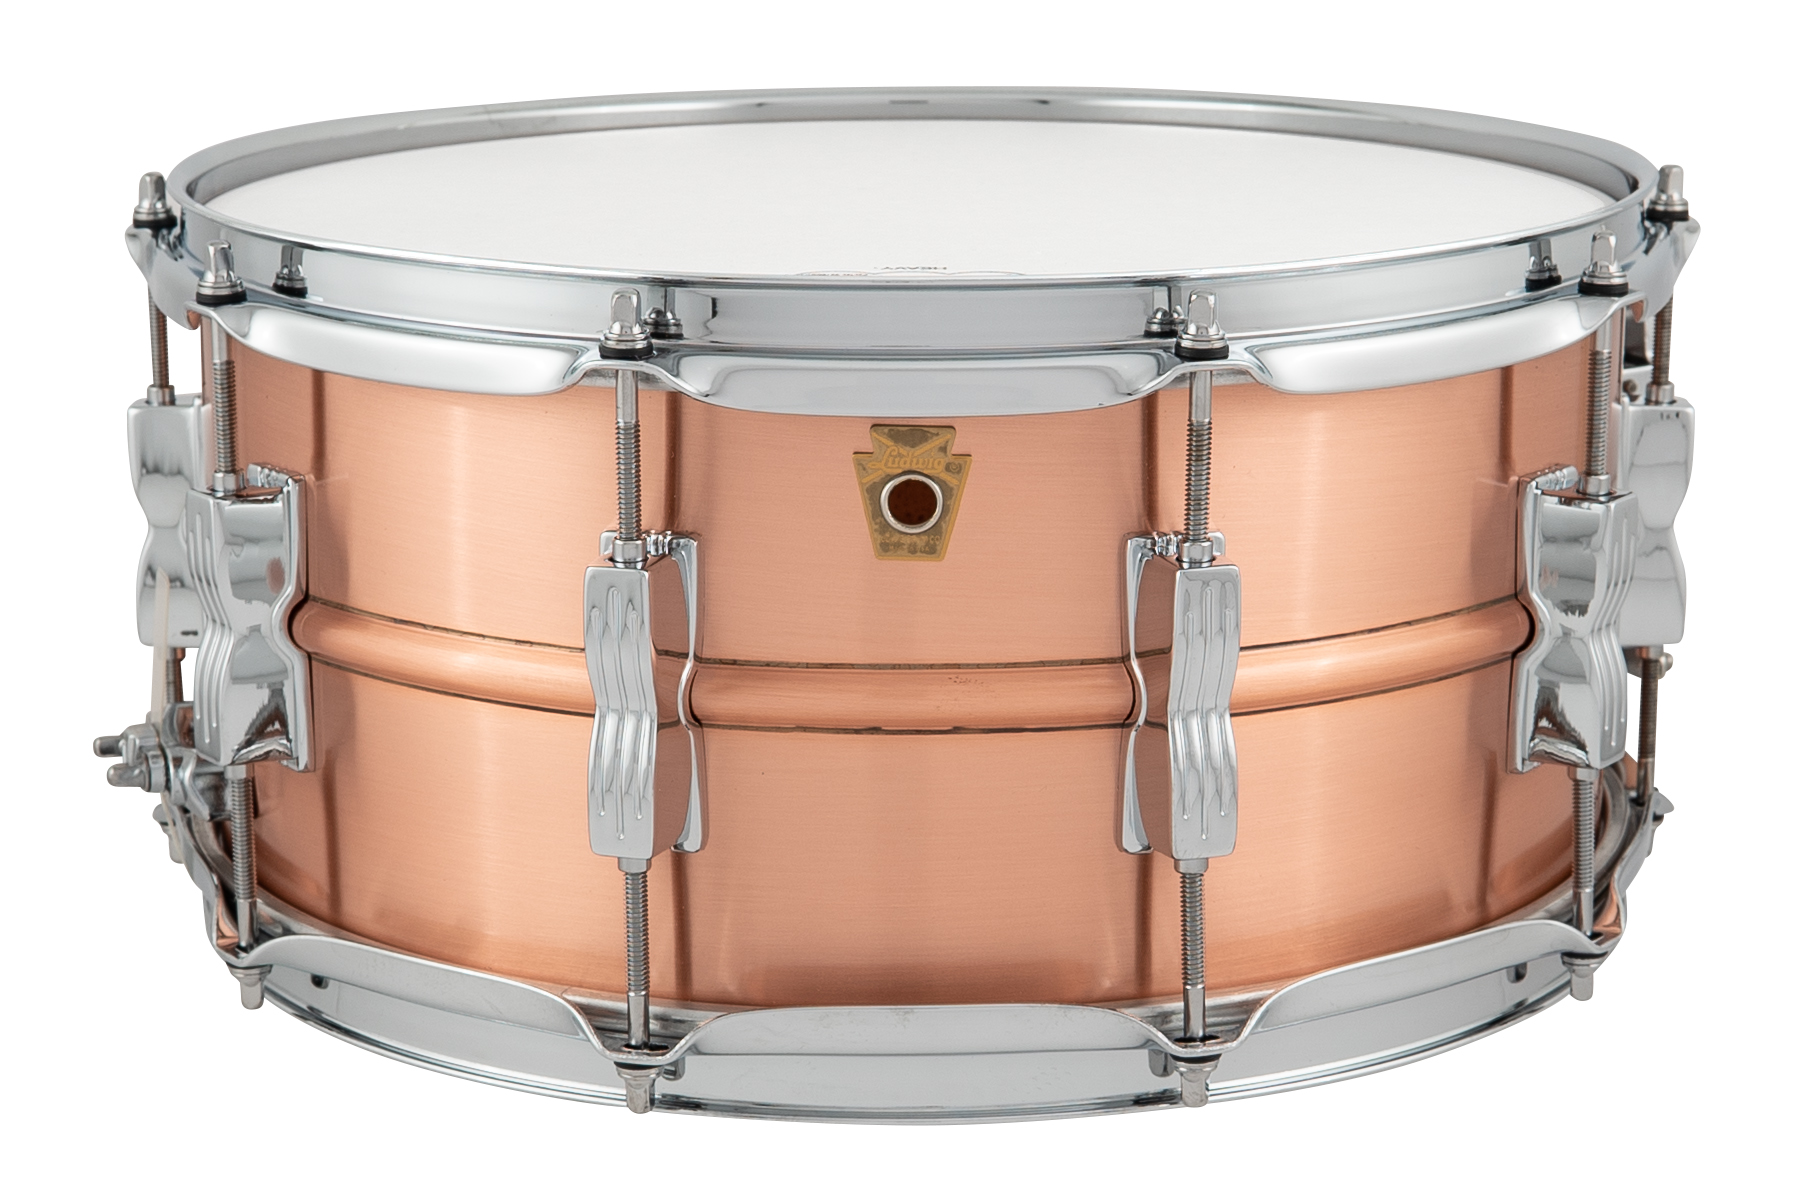 LC654B Acro Copper Snare Drum 14"×6.5" / アクロライト コパー・スネアドラム